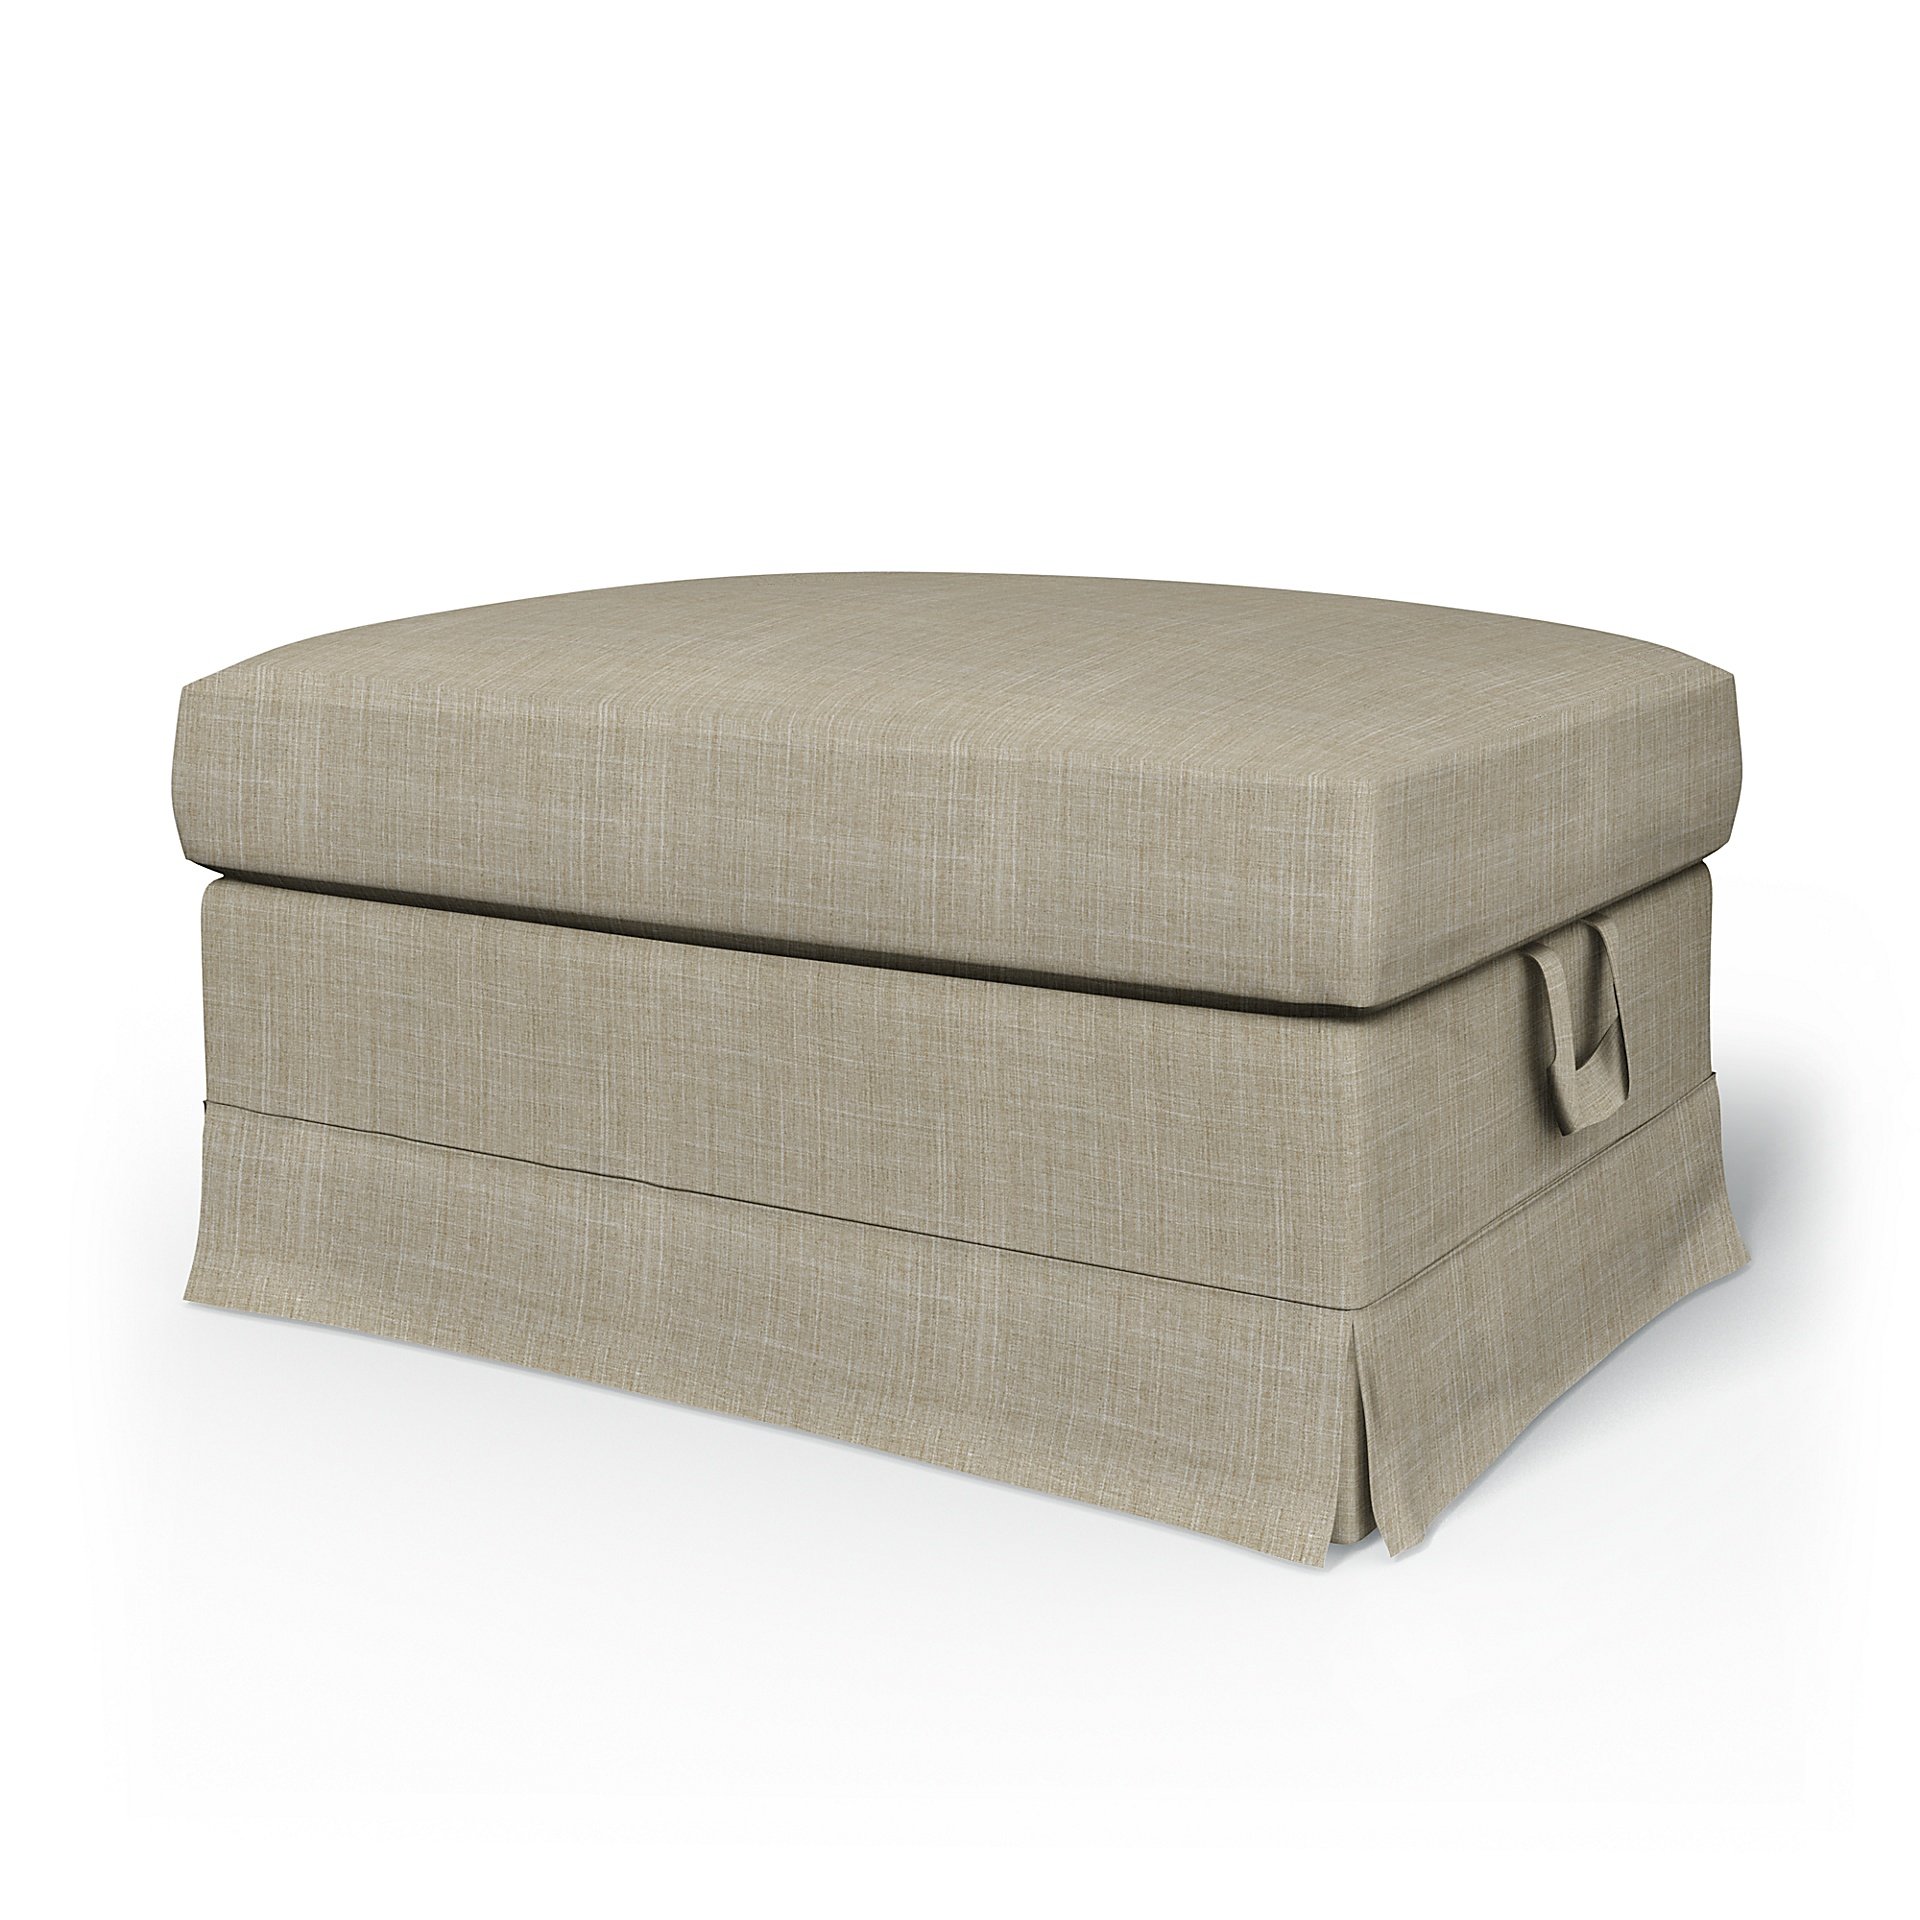 IKEA - Ektorp Footstool Cover, Sand Beige, Boucle & Texture - Bemz